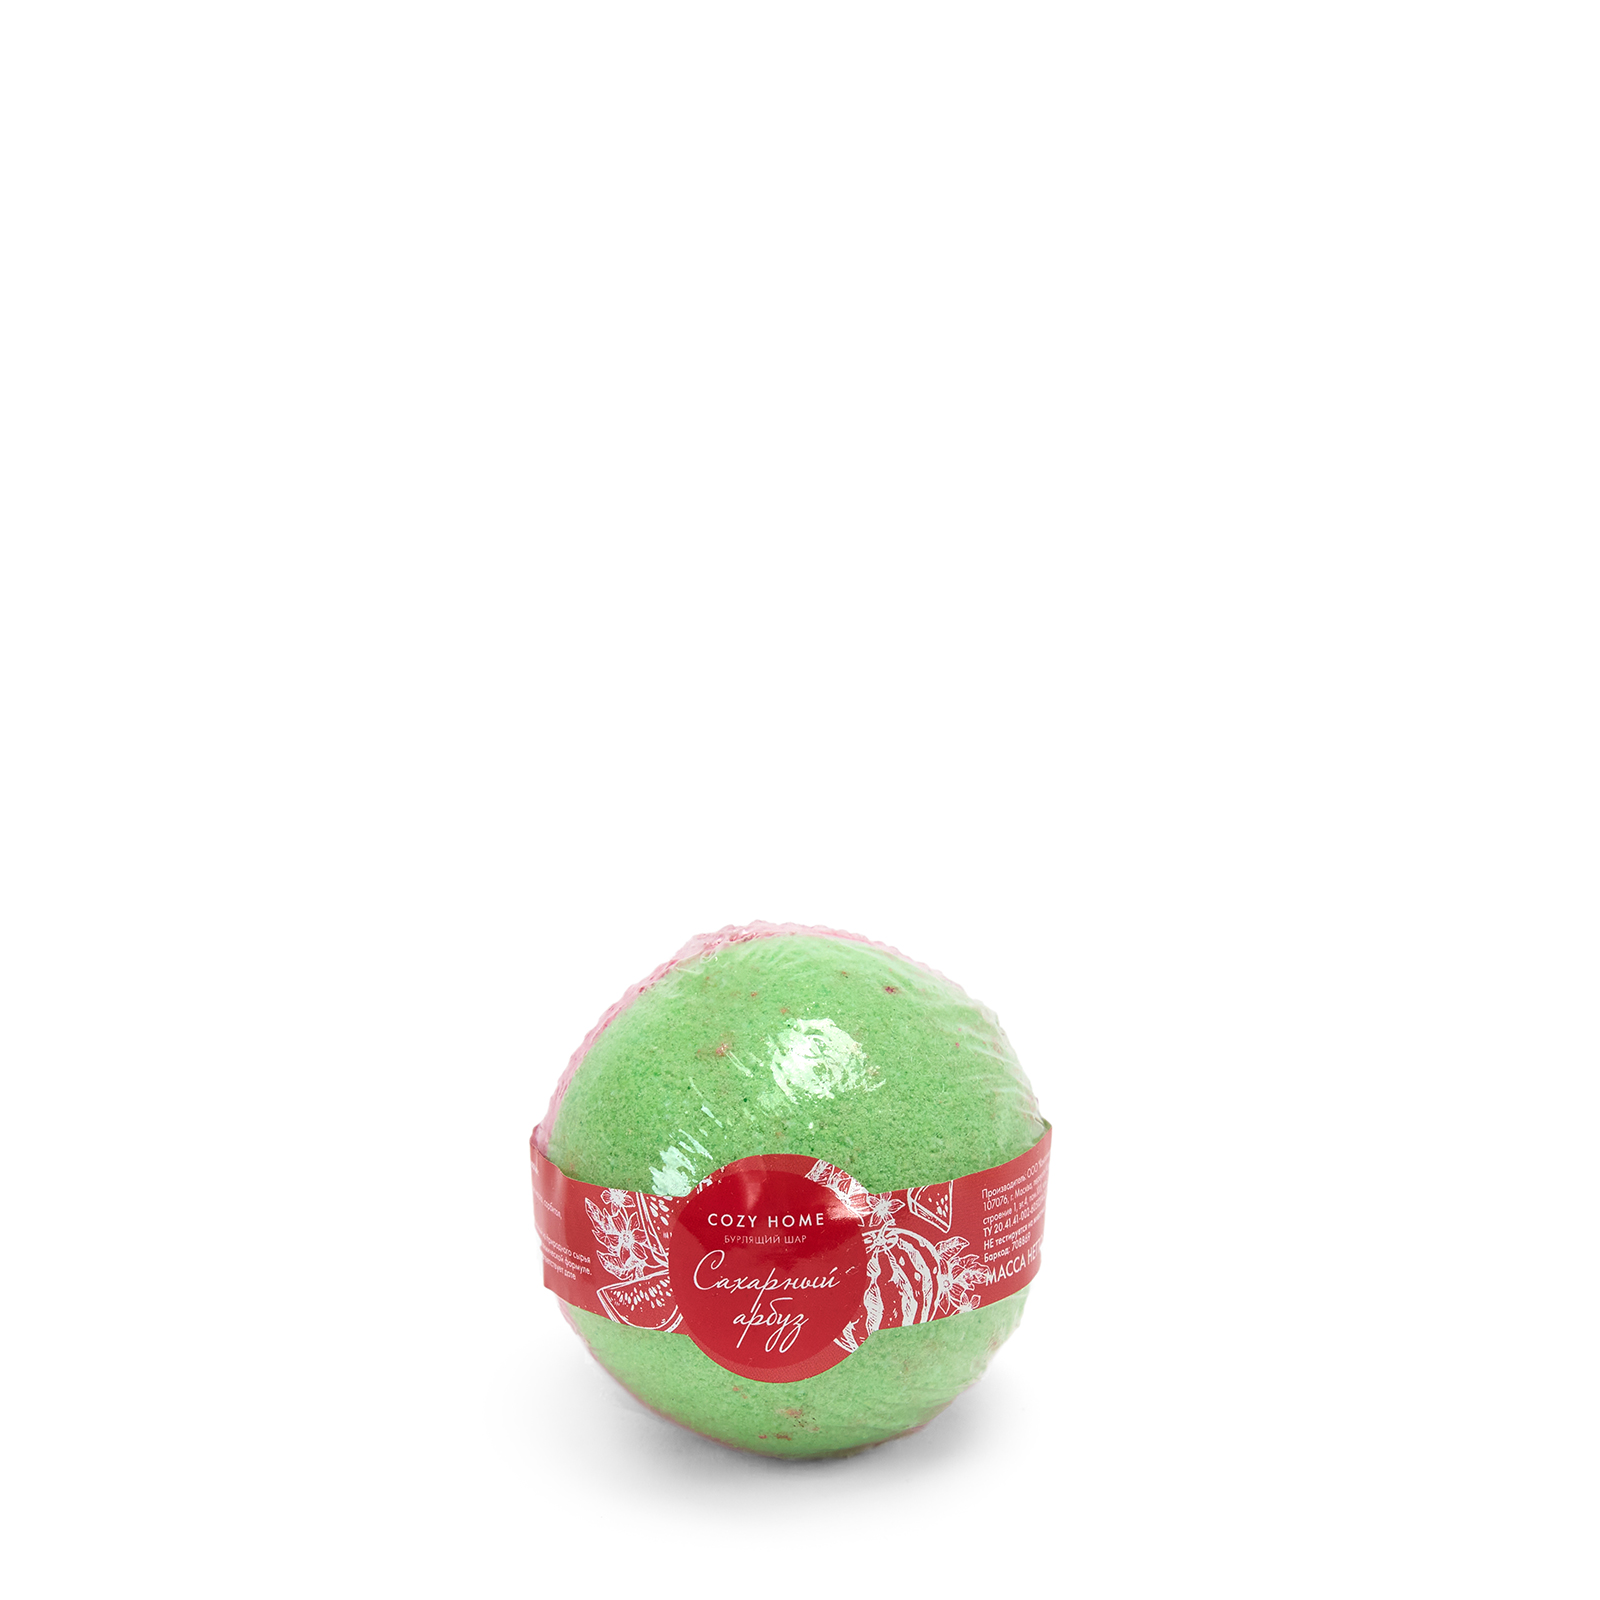 Шар для ванны Сахарный арбуз CozyHome, цвет зеленый, размер Один размер - фото 5